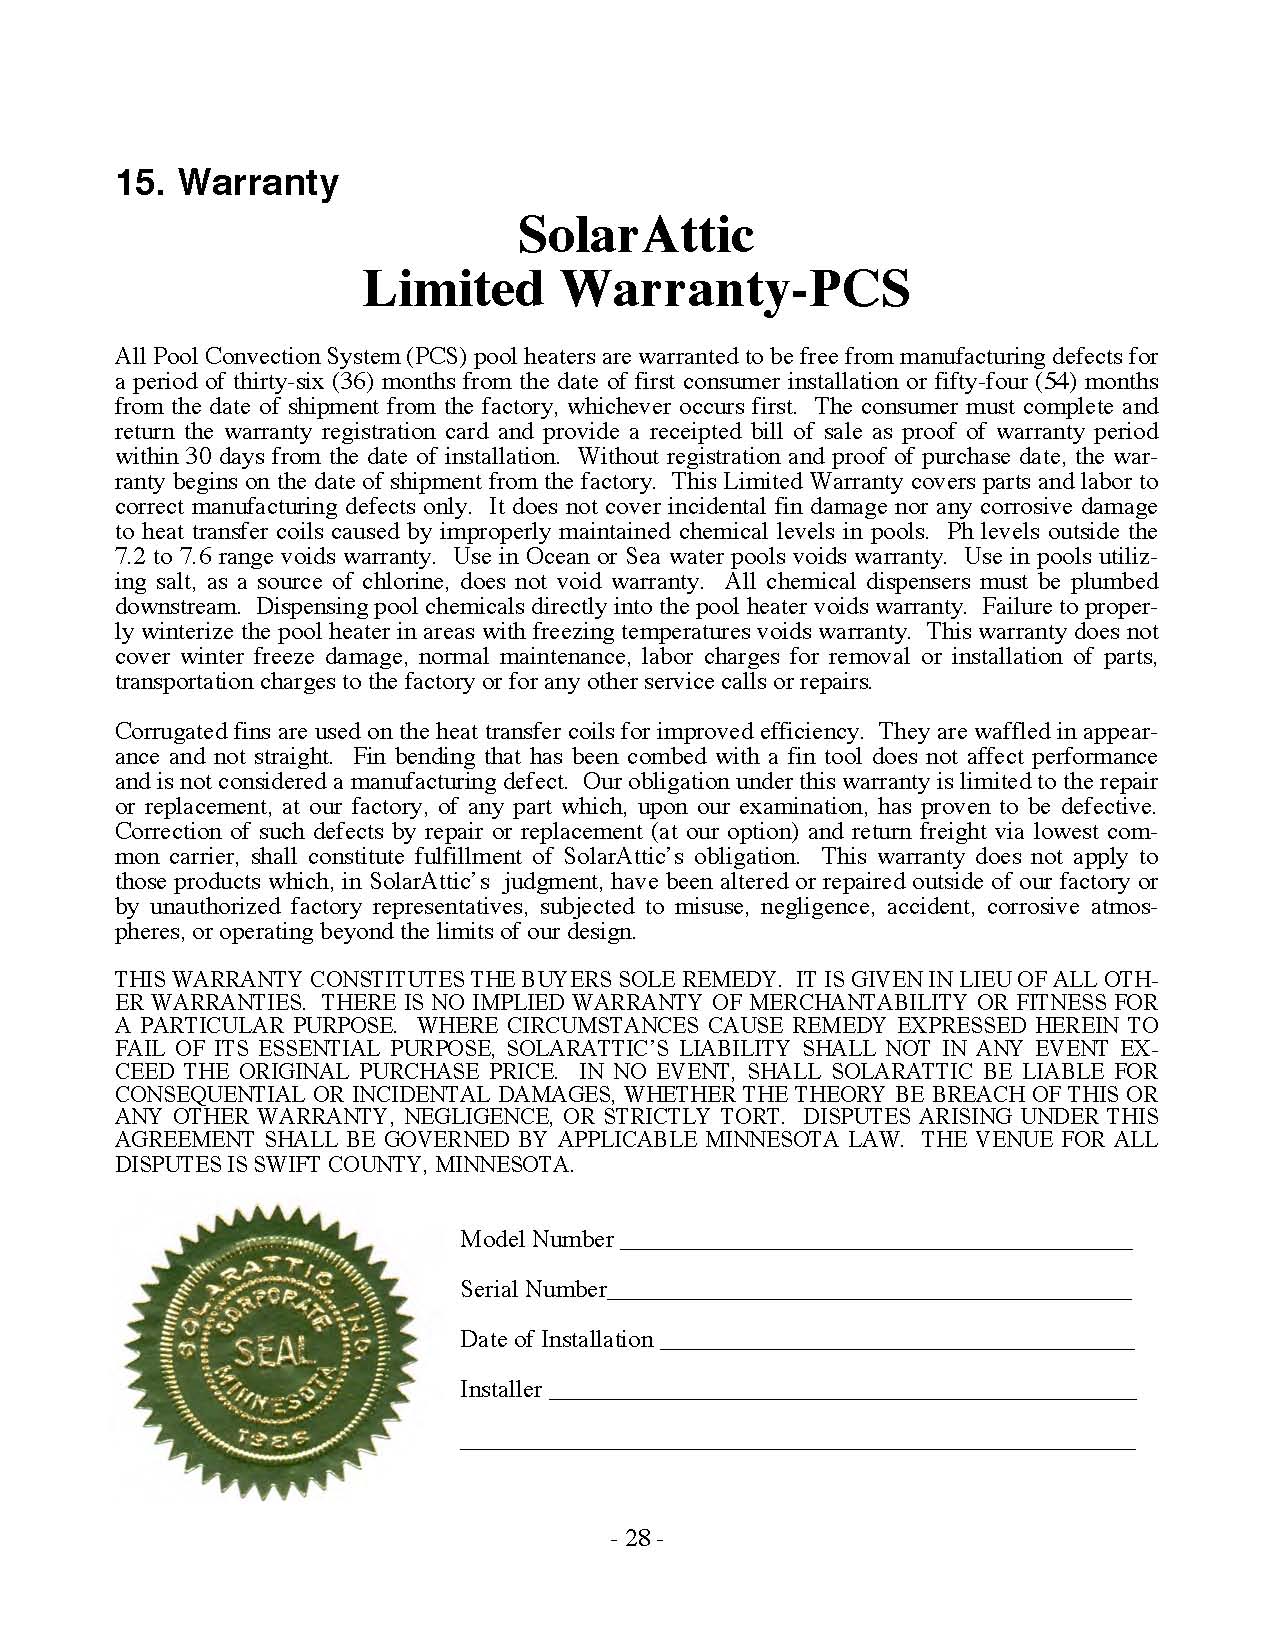 Image of the third generation attic solar pool heater model PCS3 Warranty Certificate